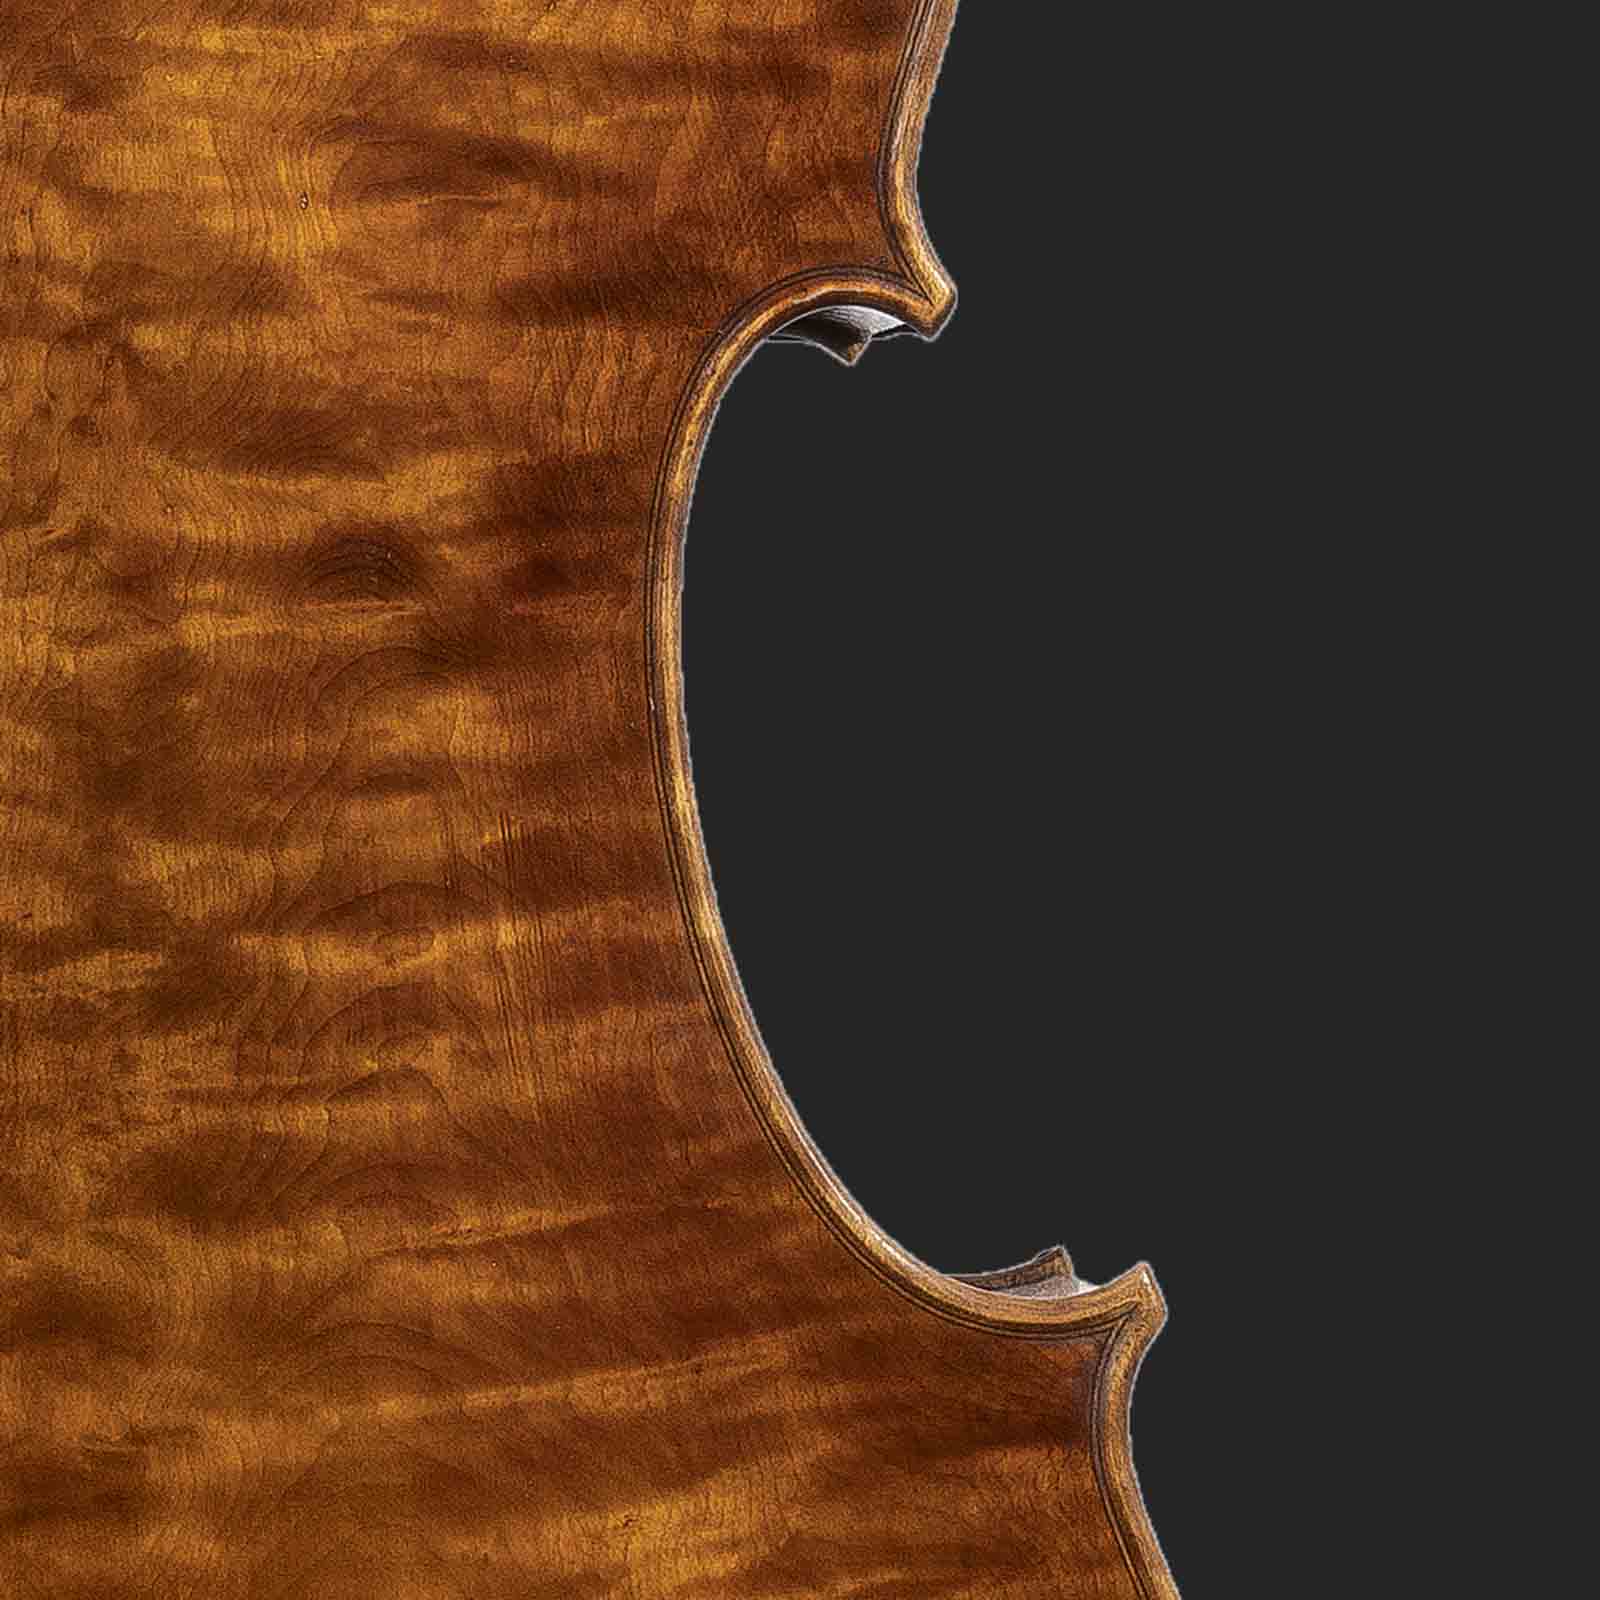 Antonio Stradivari Cremona 1730 “Cristiani“ “Kyoto“ - Image 3